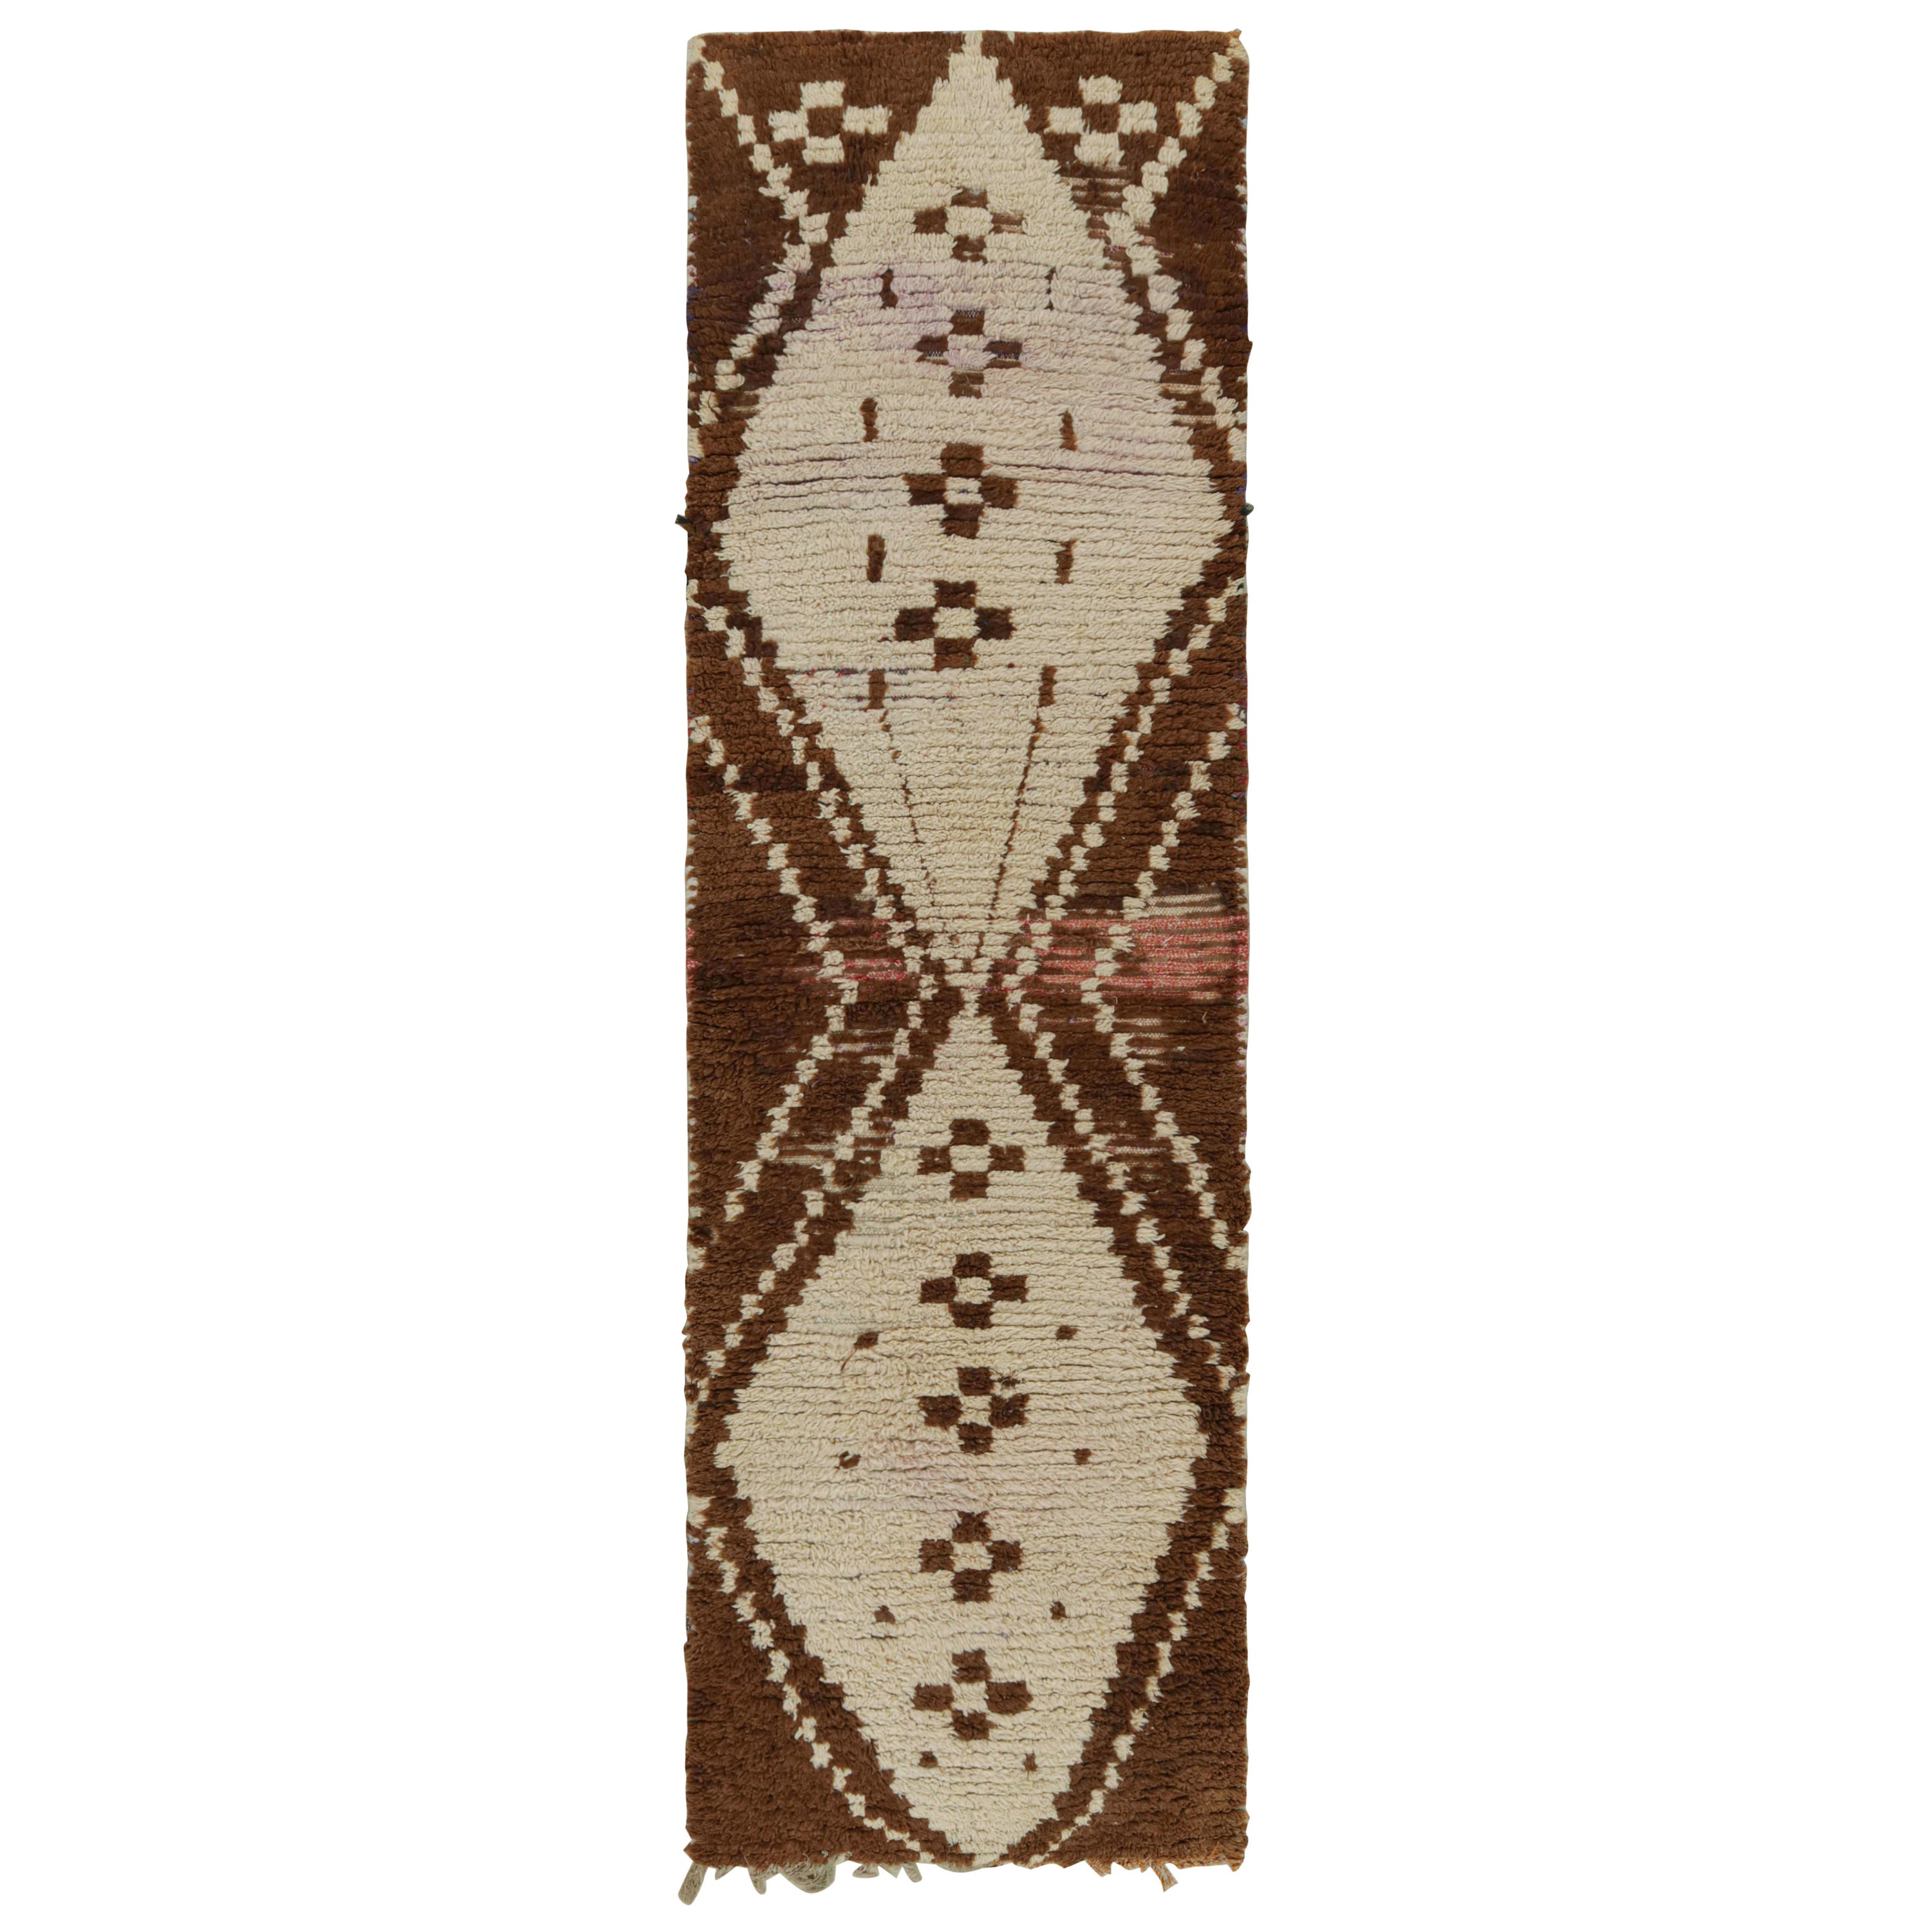 1950s Azilal Moroccan runner rug in Beige-Brown Tribal Patterns by Rug & Kilim